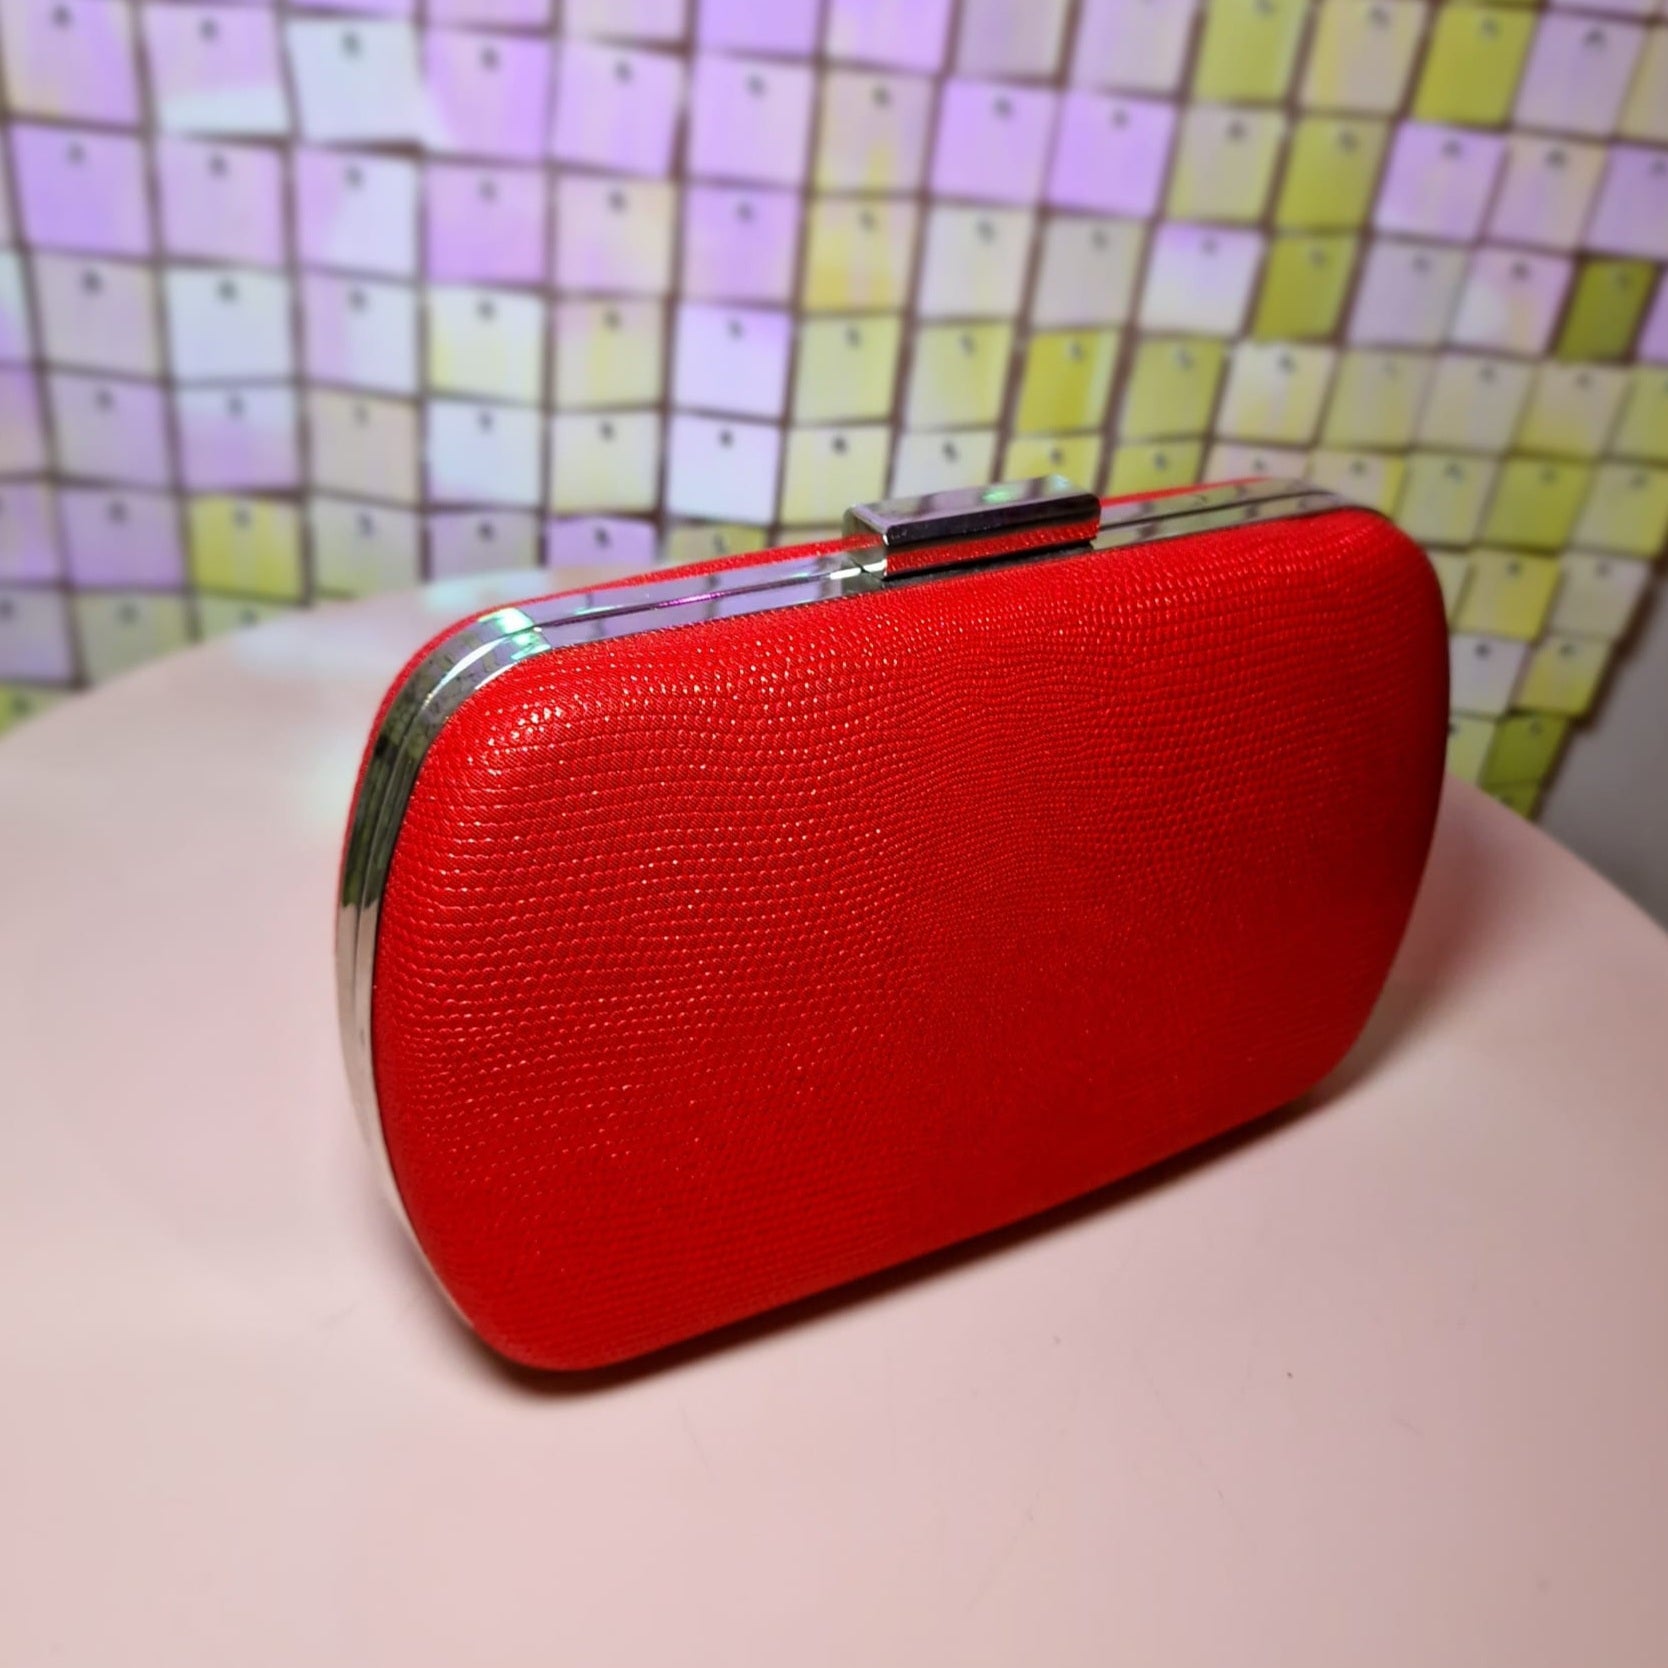 Red Metallic Clutch Handbag